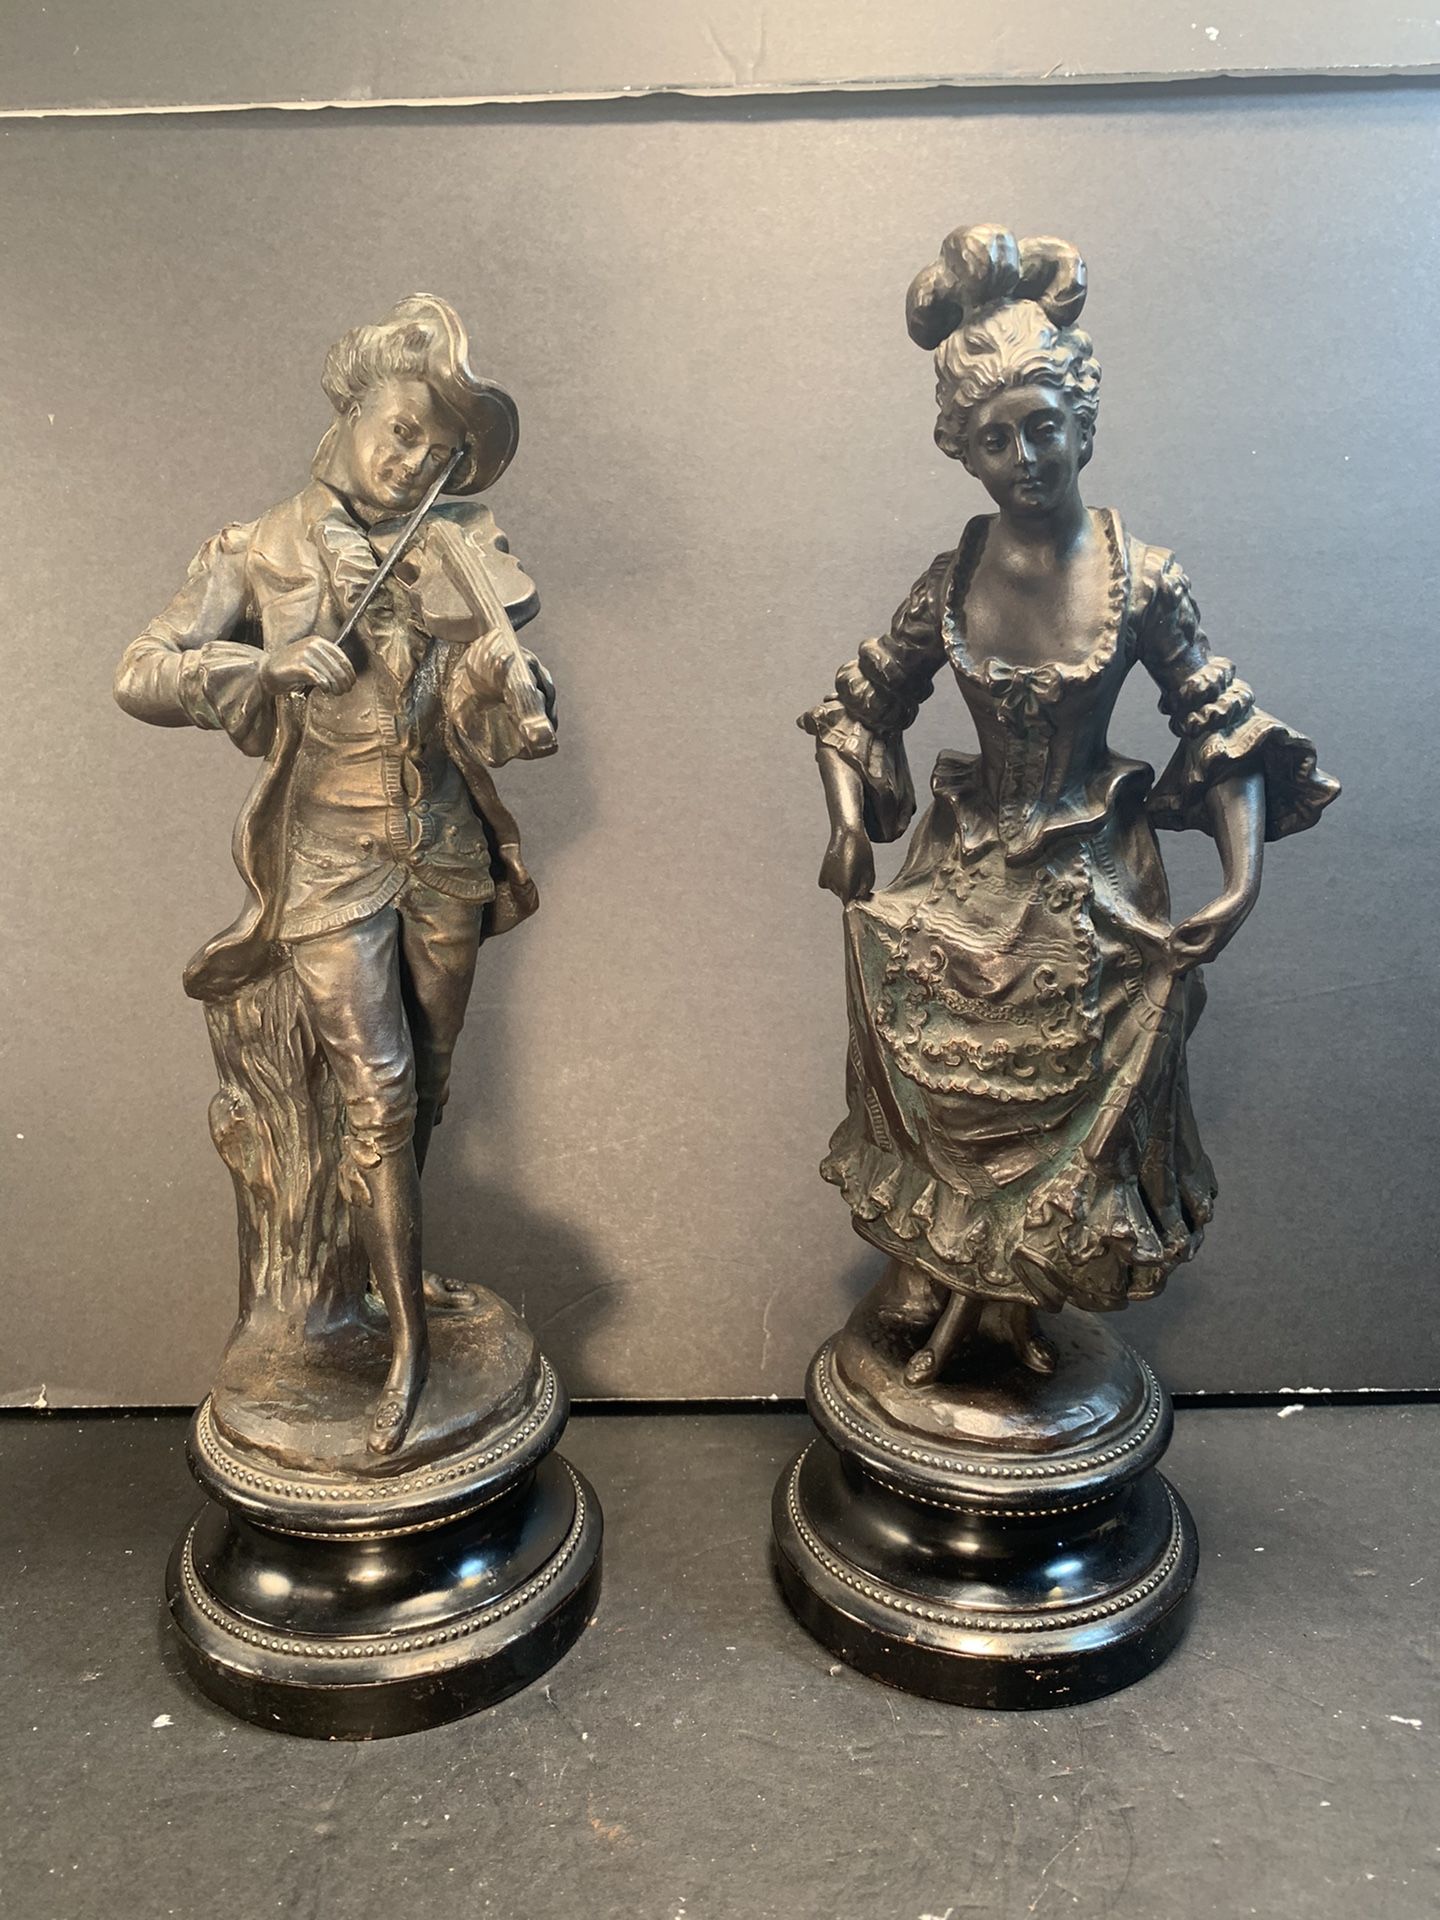 J. UFFRECHT & Co Antique German Detailed Victorian Couple Ceramic Statues (Height: 12-1/2”)